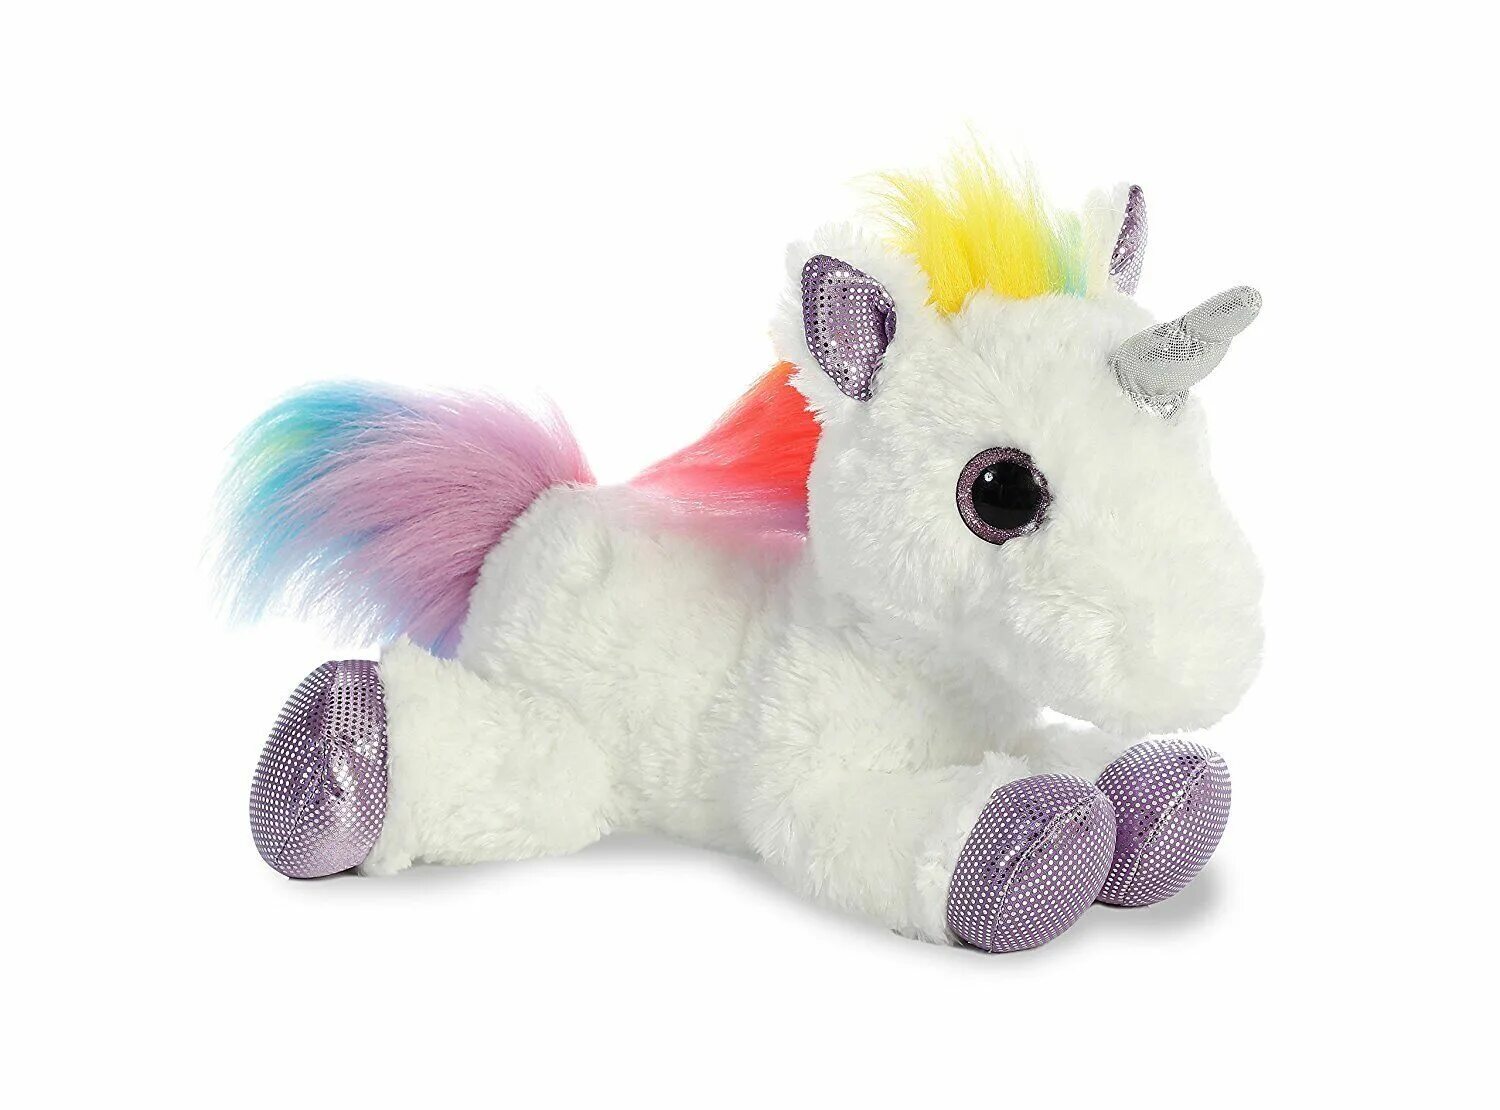 Мягкая игрушка единорог купить. Aurora игрушка Единорожка. Мягкая игрушка Единорог Aurora. Игрушка мягкая Aurora Единорог белый. Rainbow Unicorn игрушка.